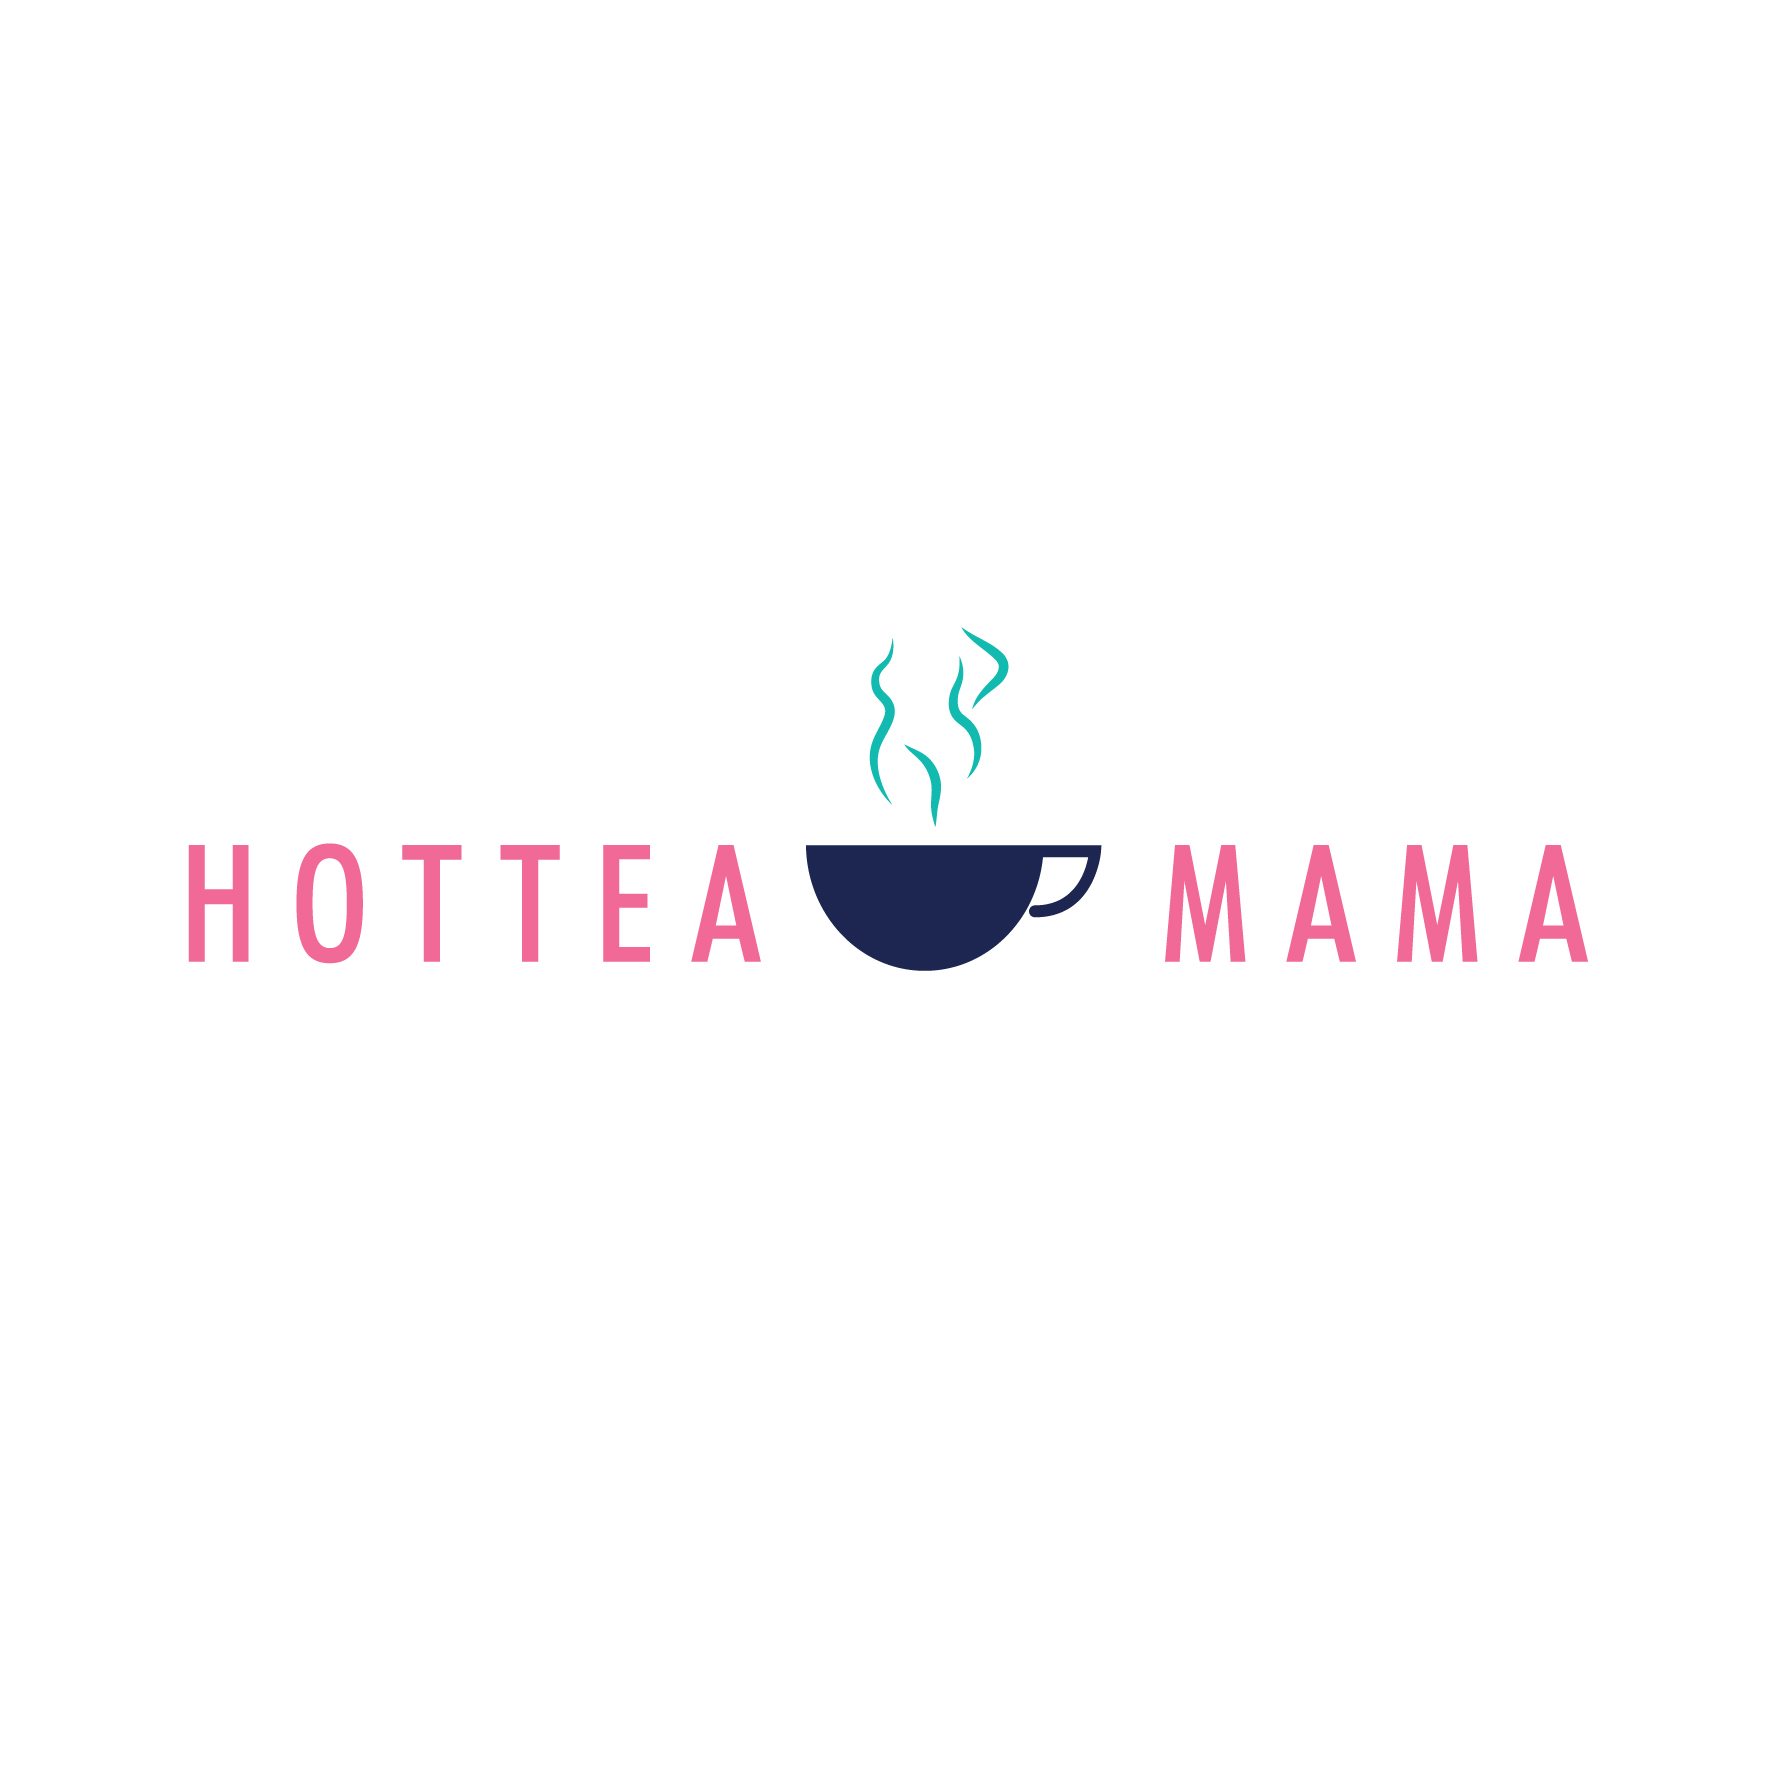 Hot Tea mama logo